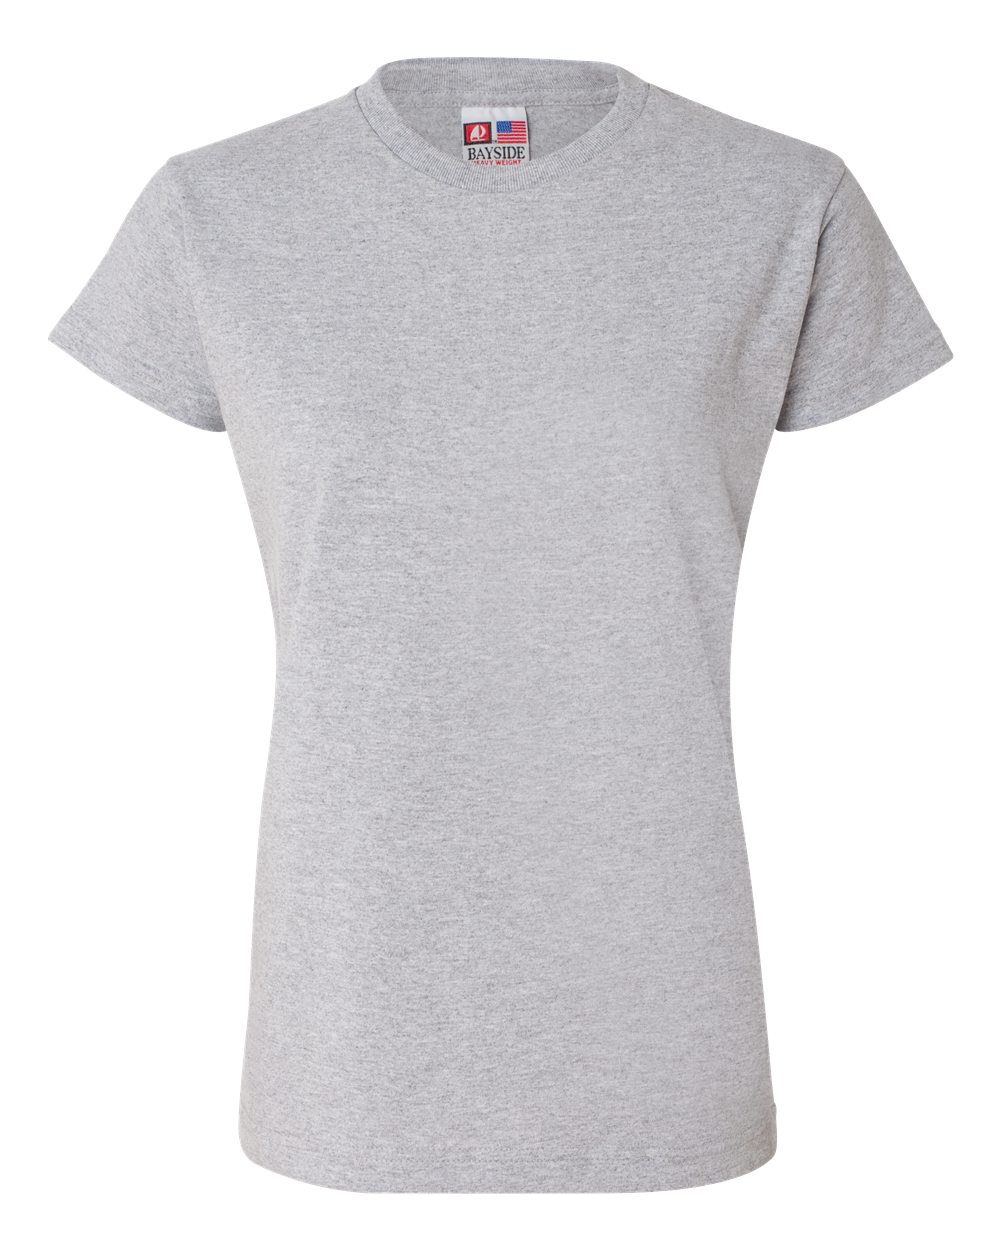 Bayside 3325 - Ladies' USA Made Short Sleeve Shirt $8.60 - T-Shirts